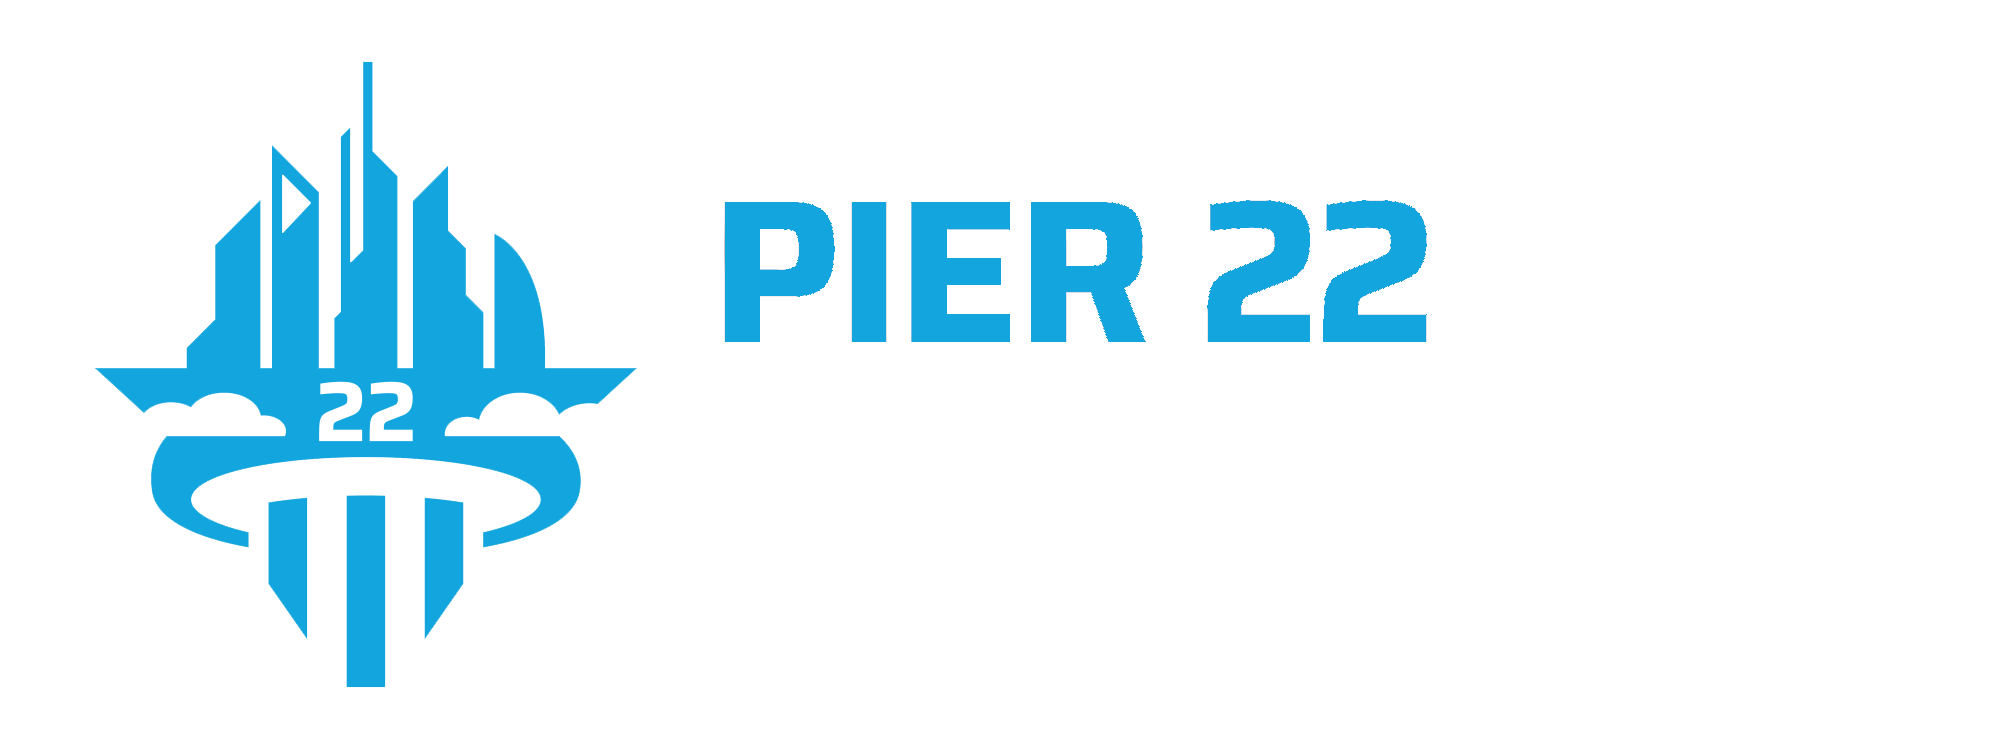 Pier 22